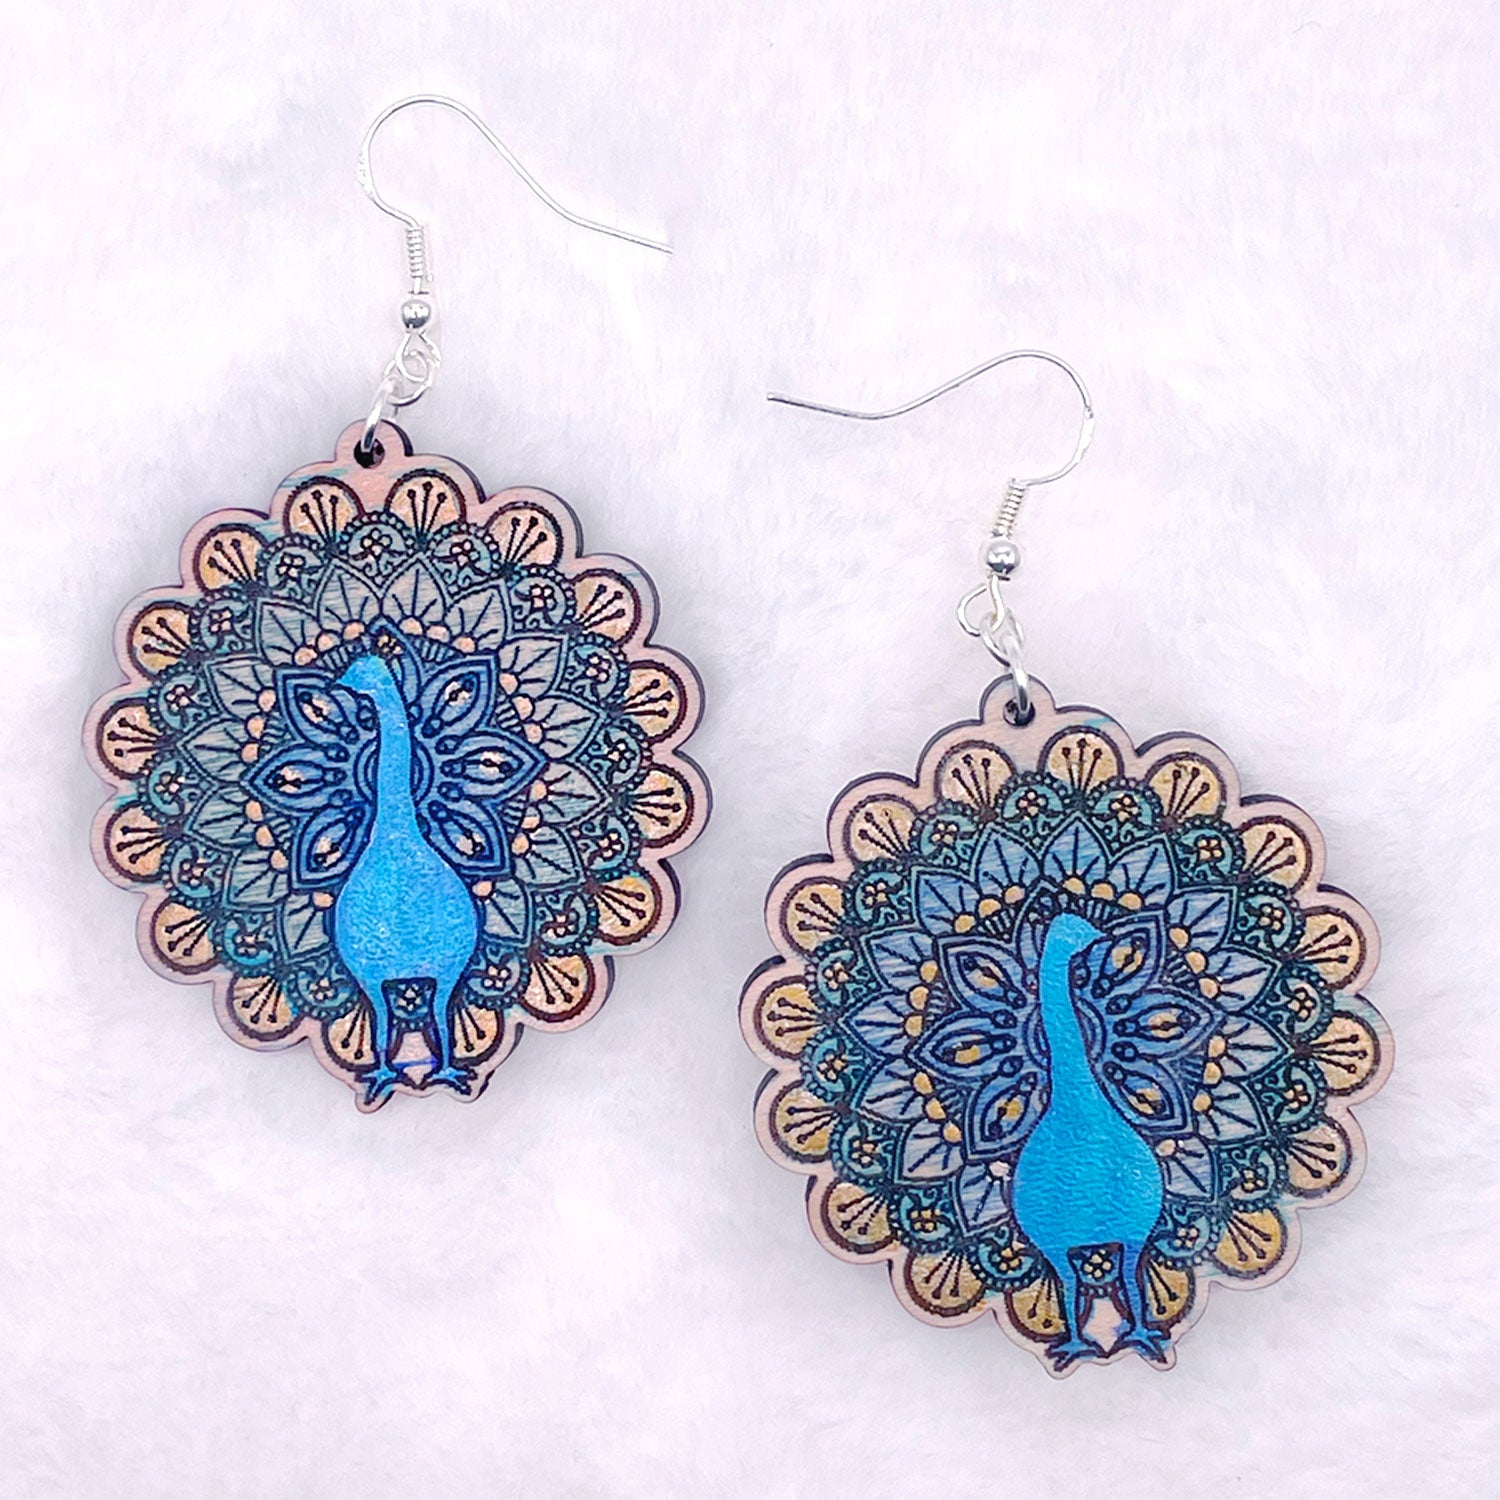 Peacock Earrings - The Heritage Art